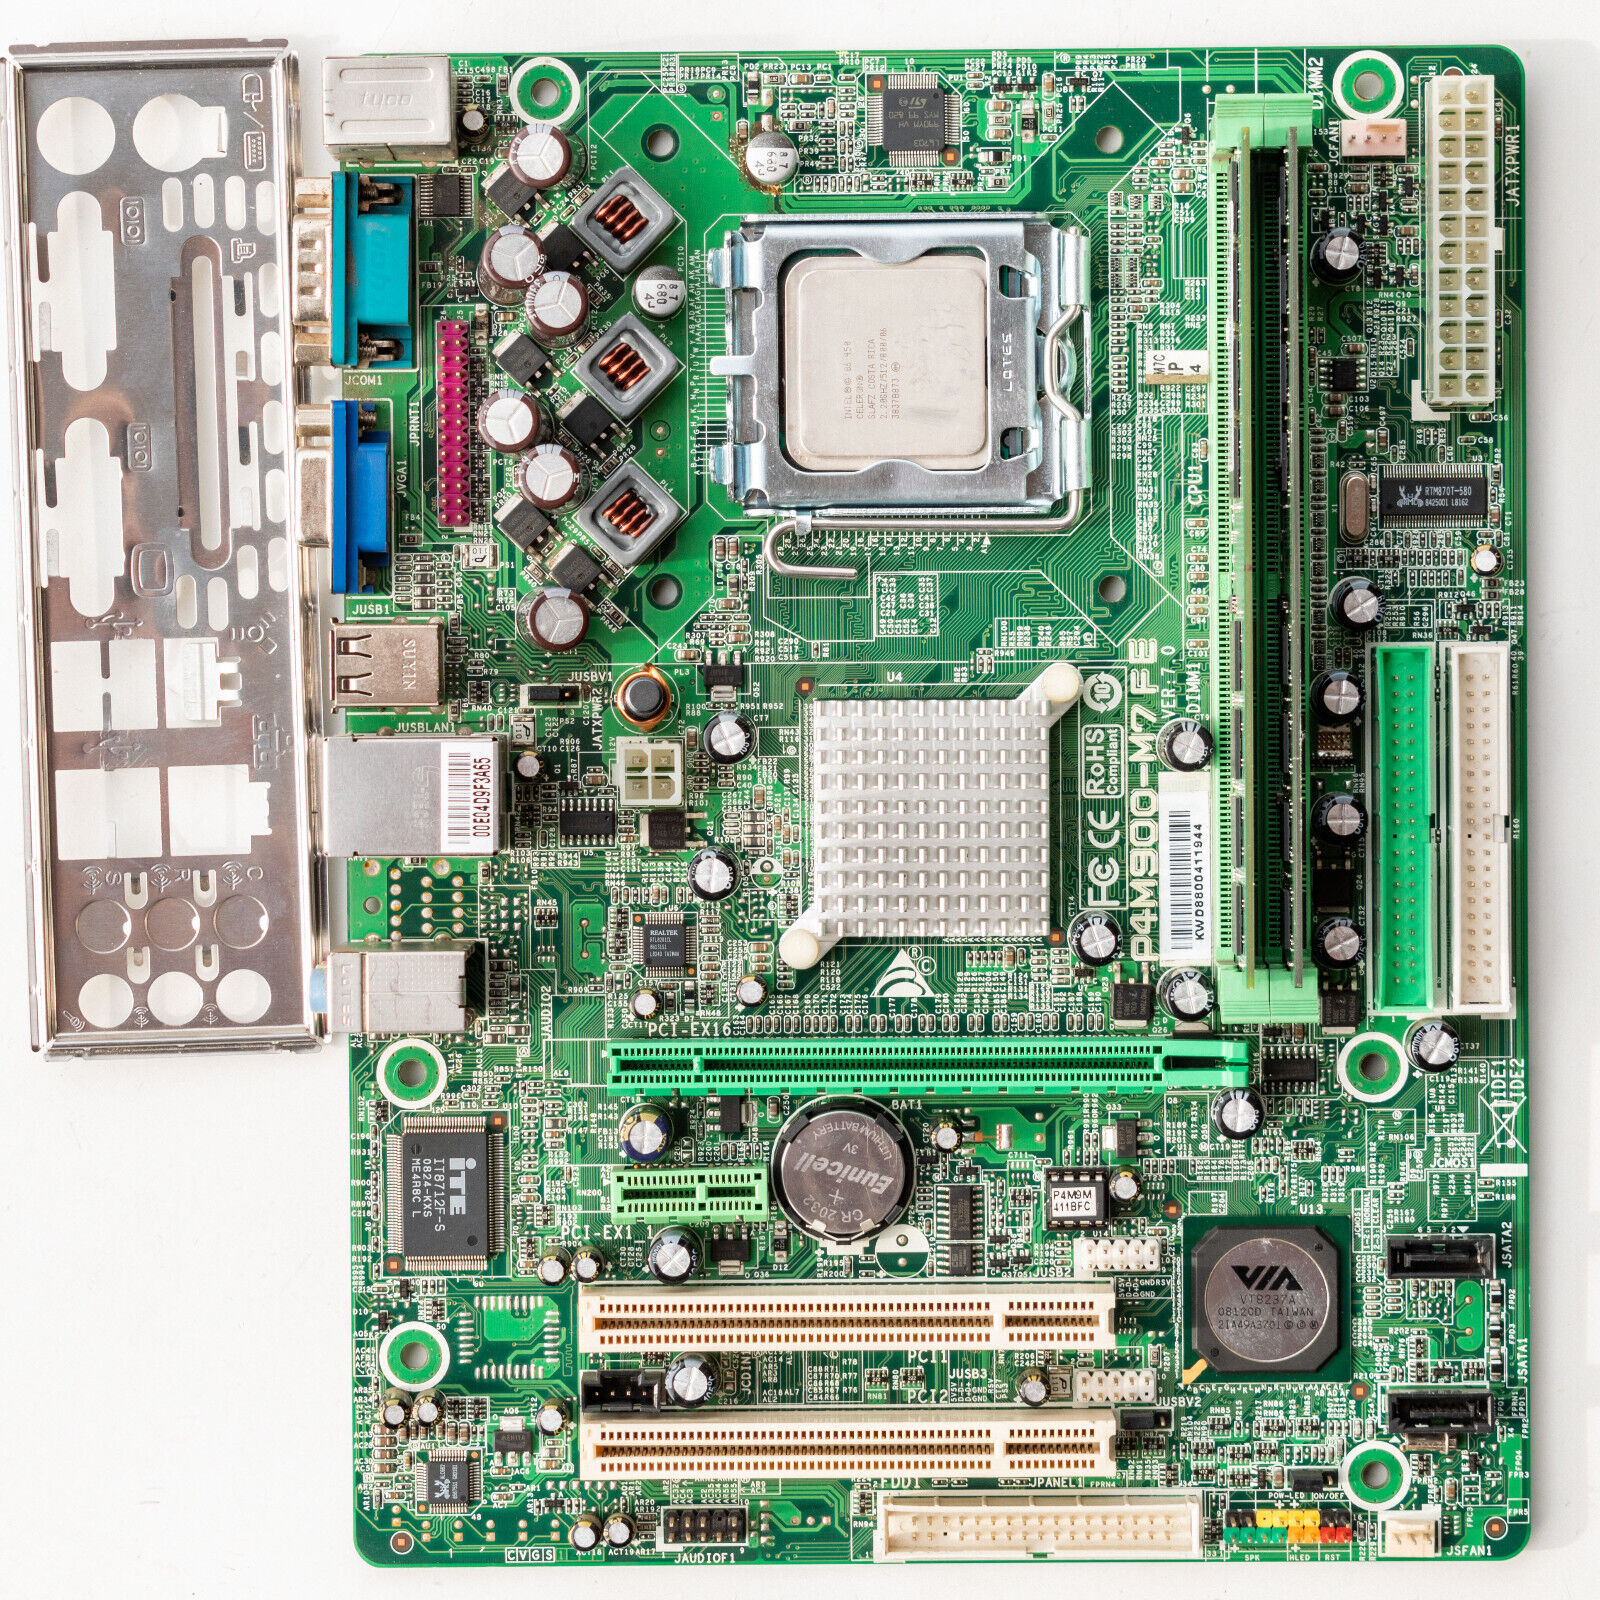 Biostar P4M890-M7 FE LGA775 Motherboard MicroATX DDR2 PCIe Windows 98 Compatible